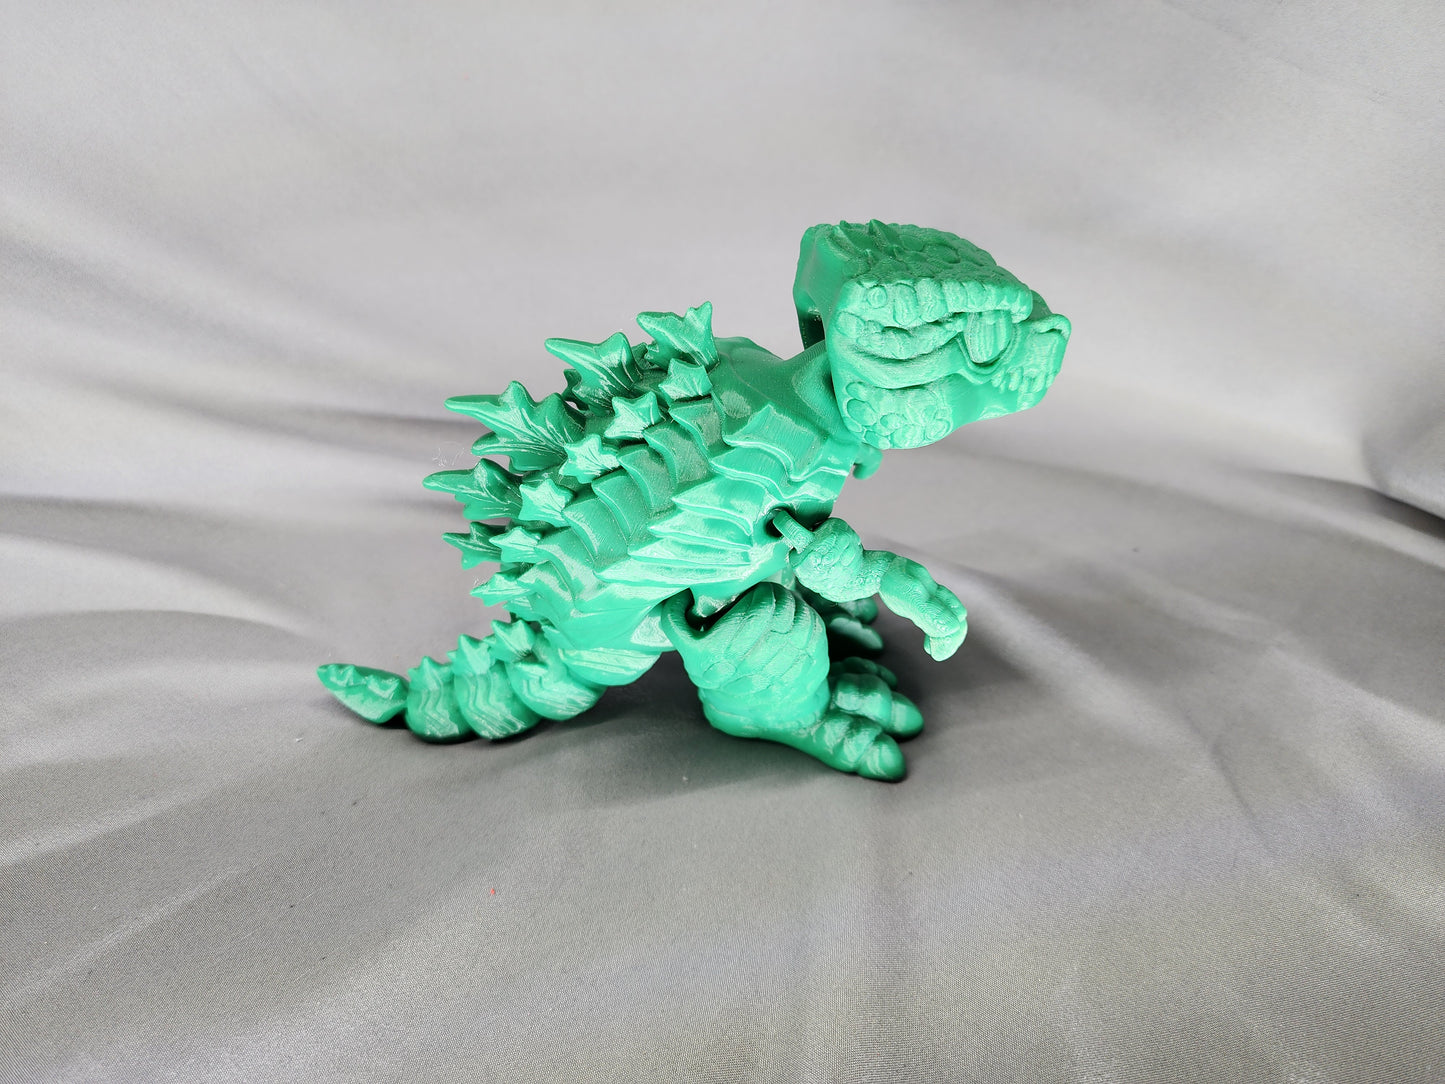 Godzilla articulating figurine